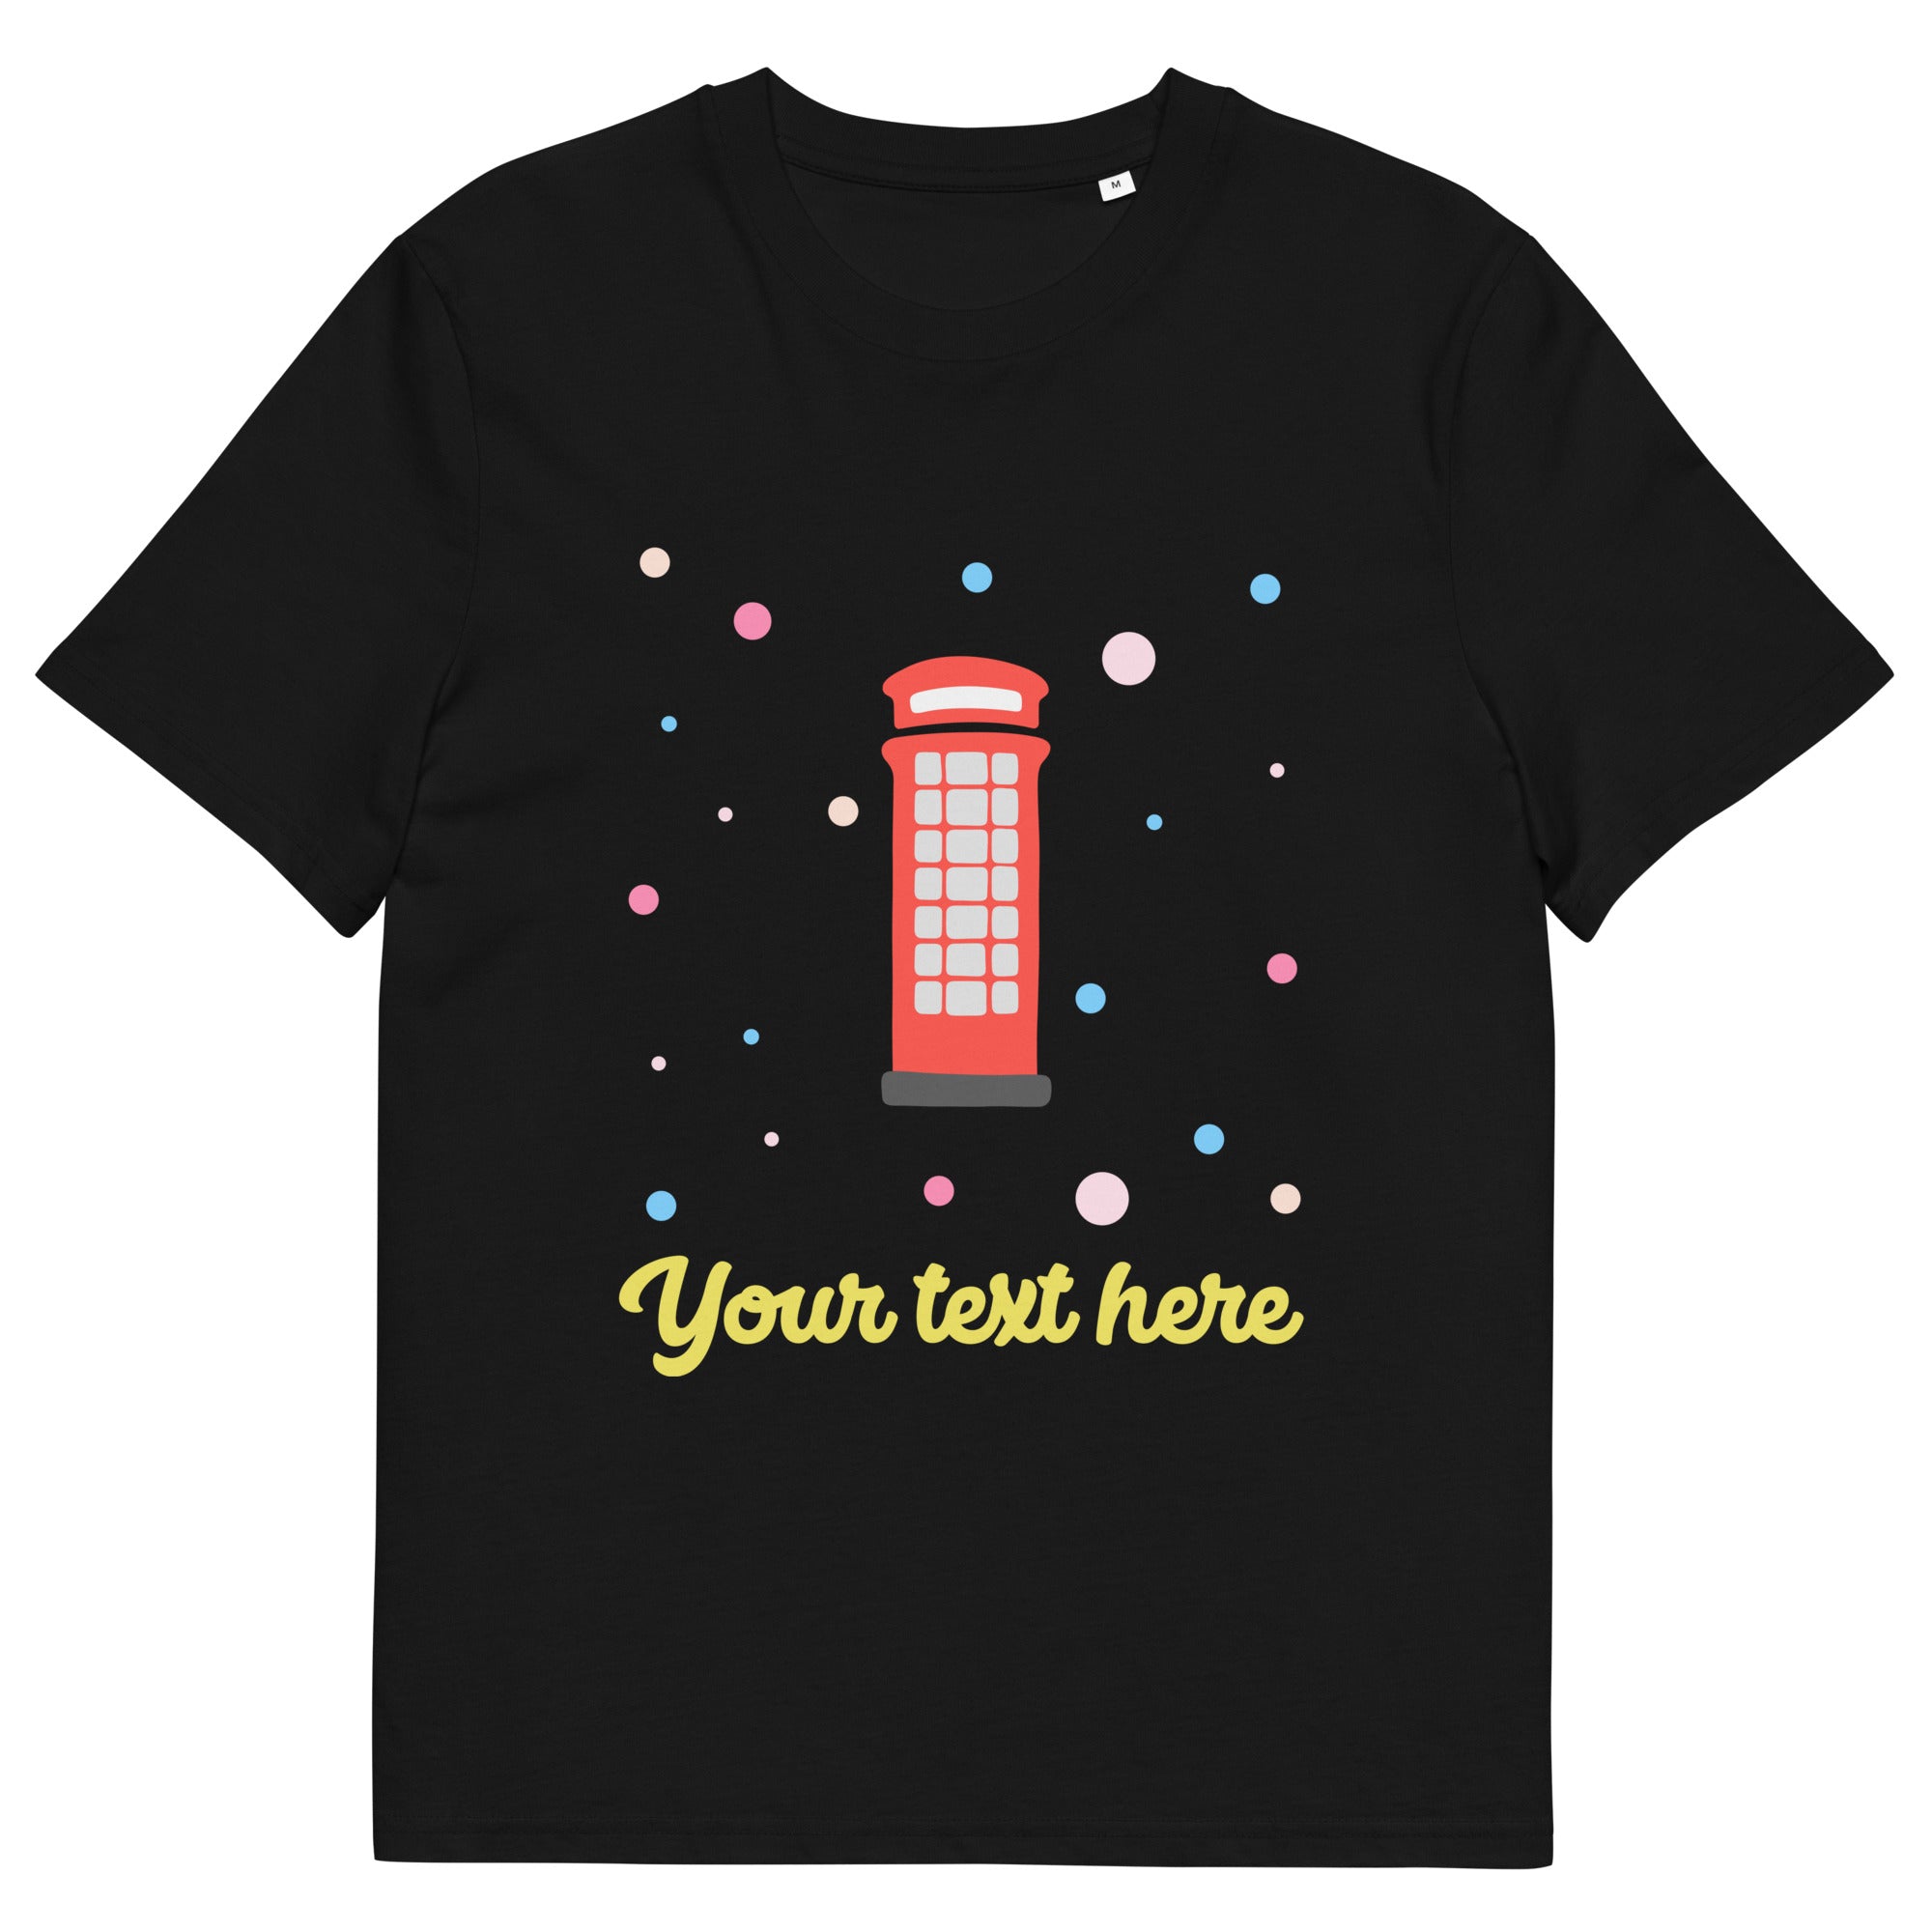 Personalised Custom Text - Organic Cotton Adults Unisex T-Shirt - London Doodles - Telephone Box - Black